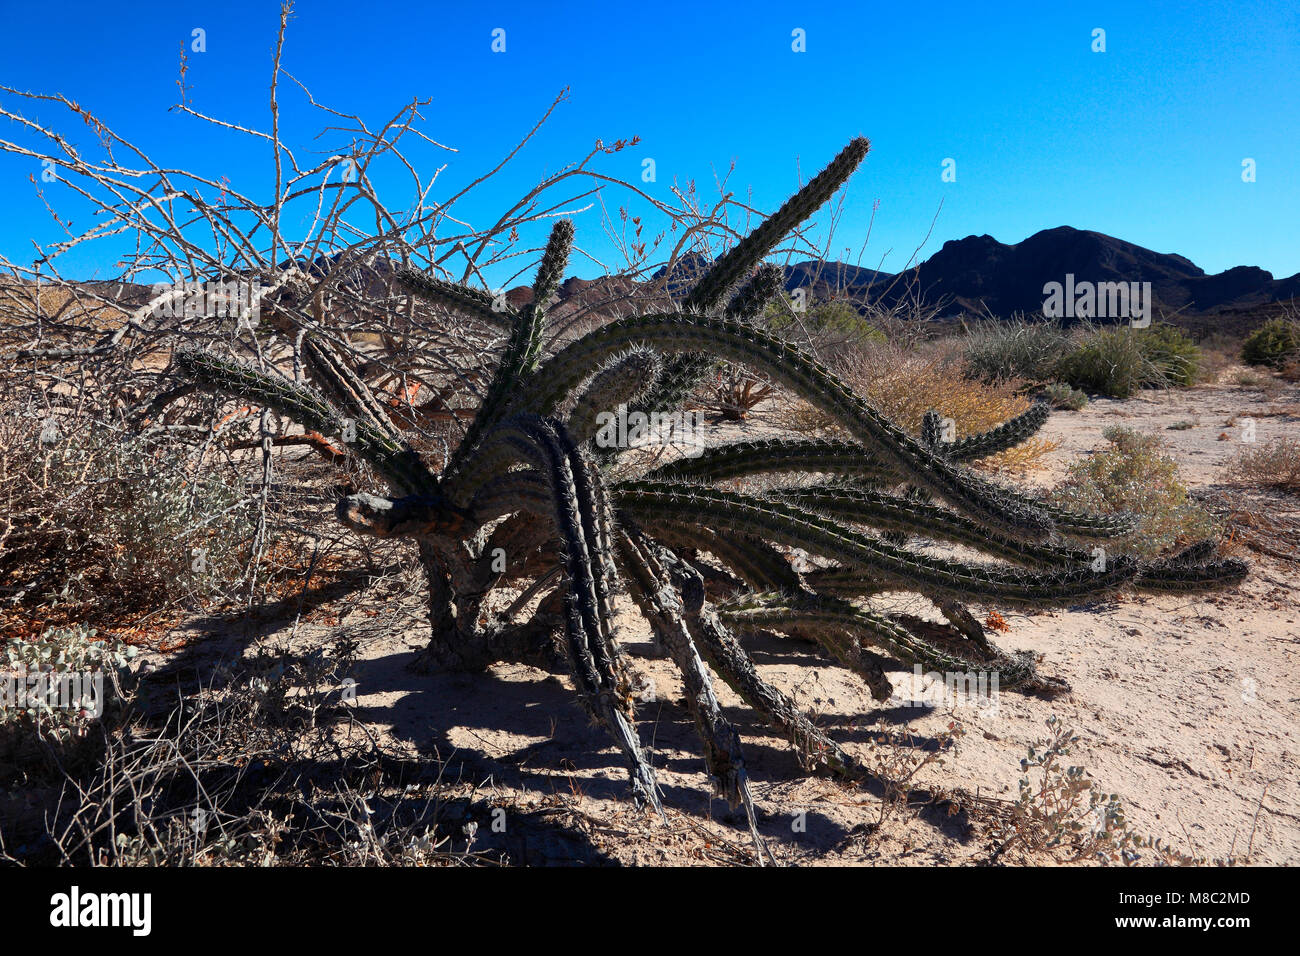 desert cactus Stock Photo